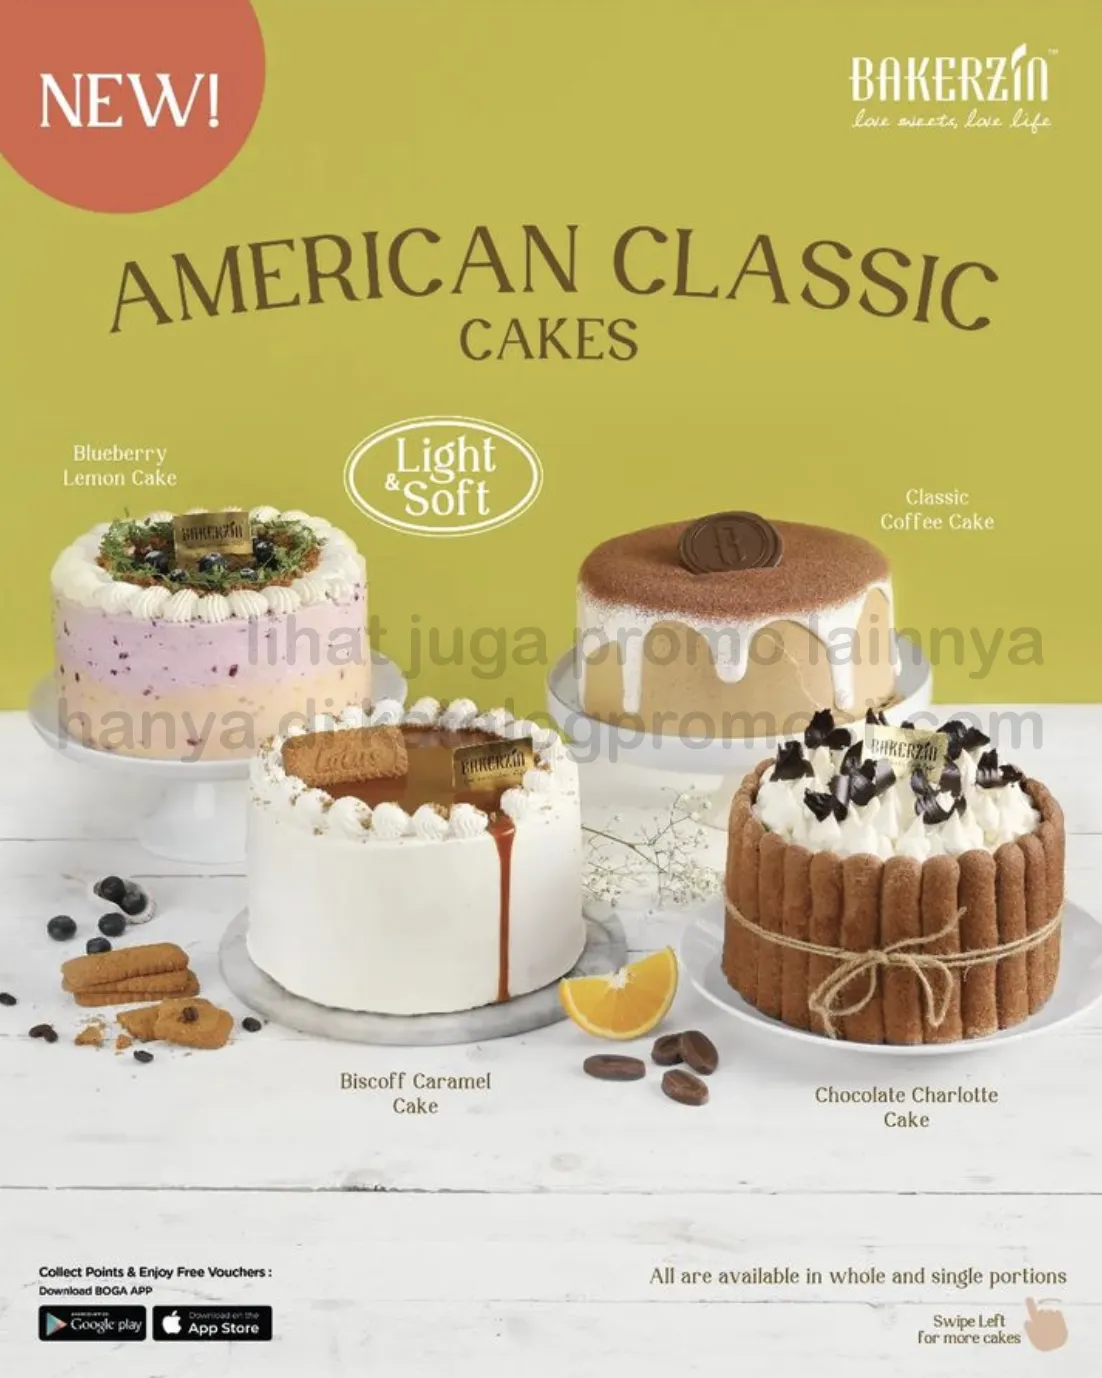 PROMO BAKERZIN NEW! American Classic Cakes